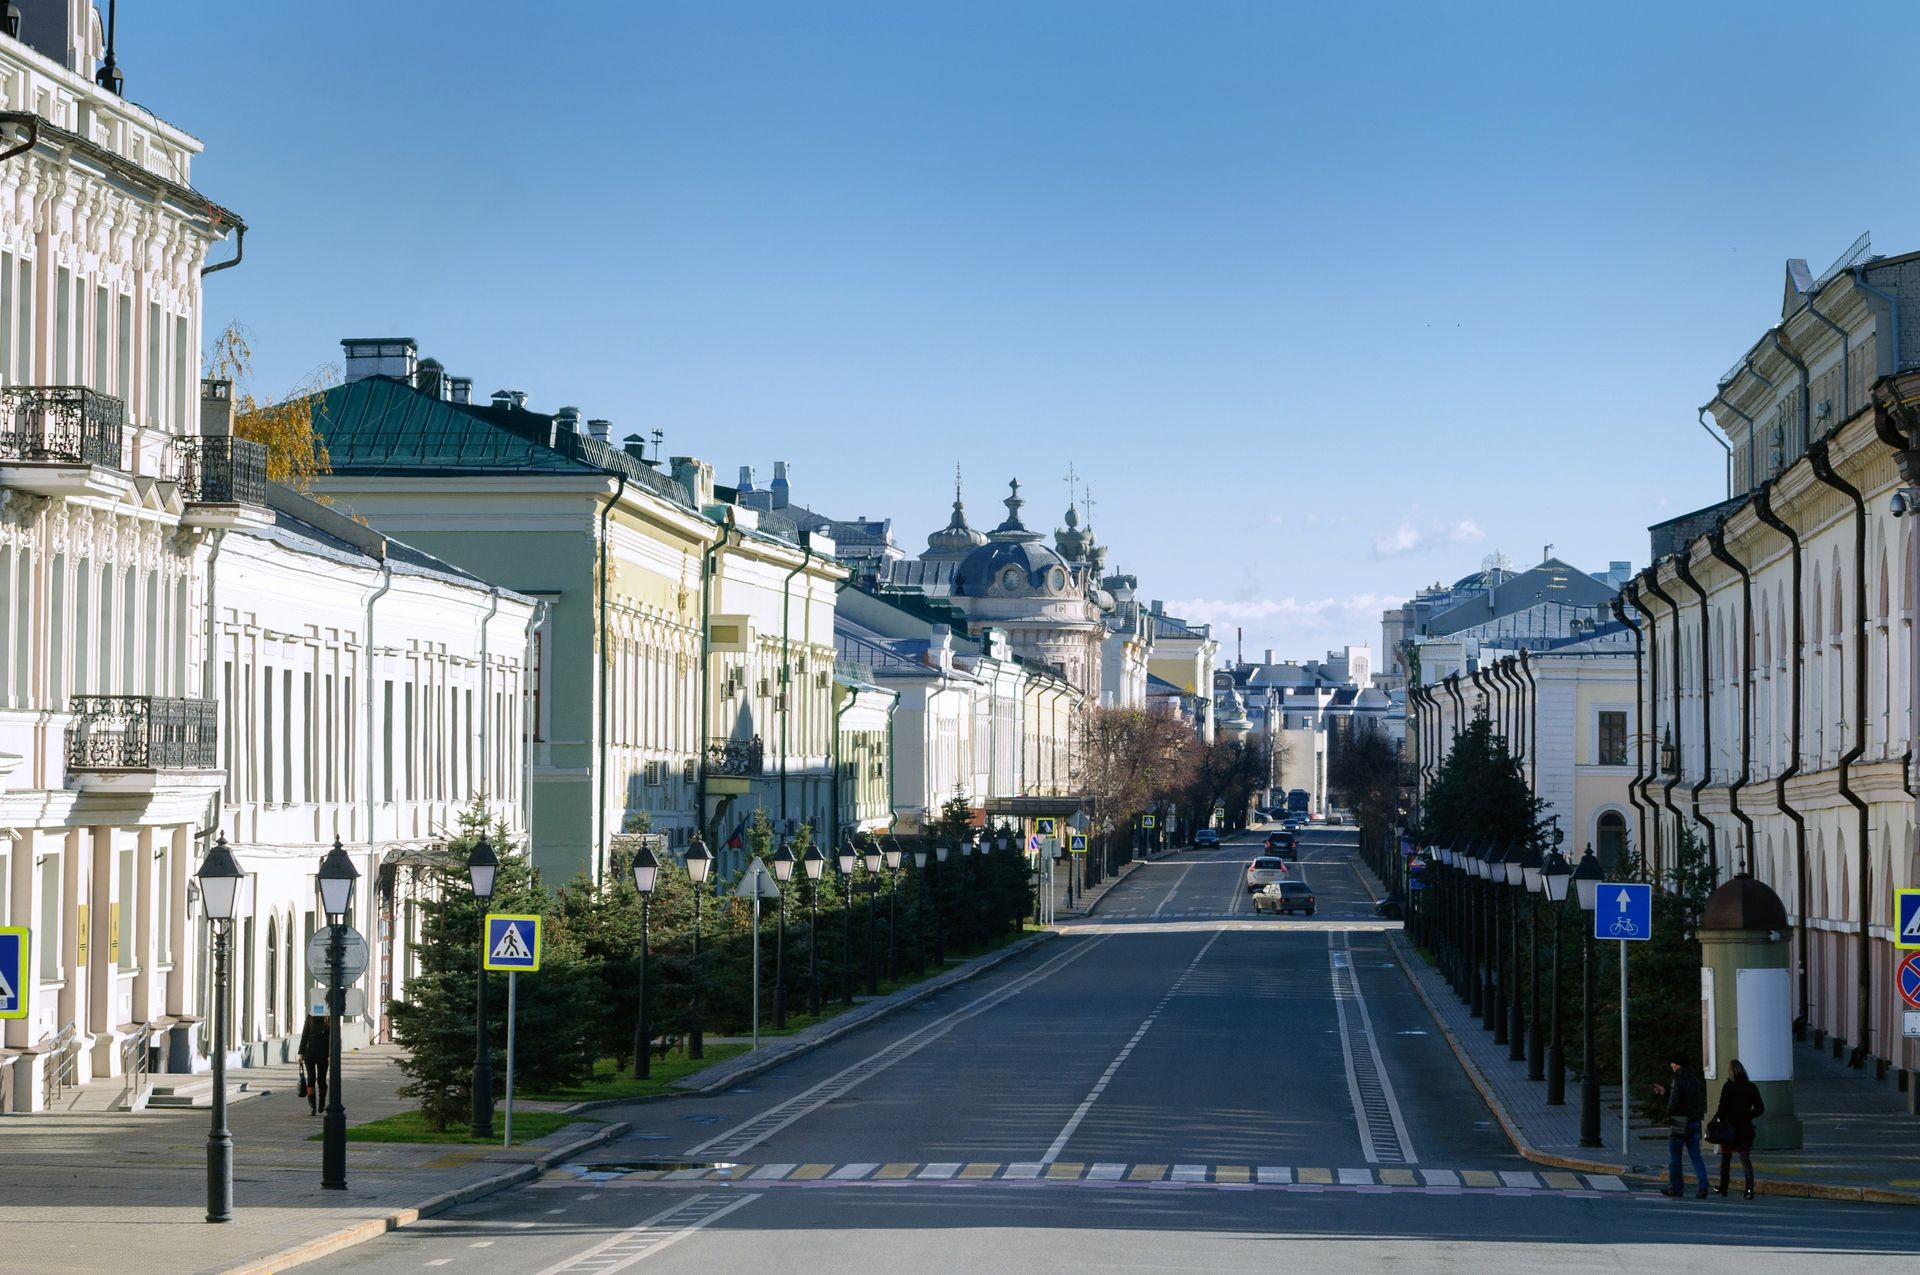 Kremlyovskaya street is the main street in the historical center of Kazan.